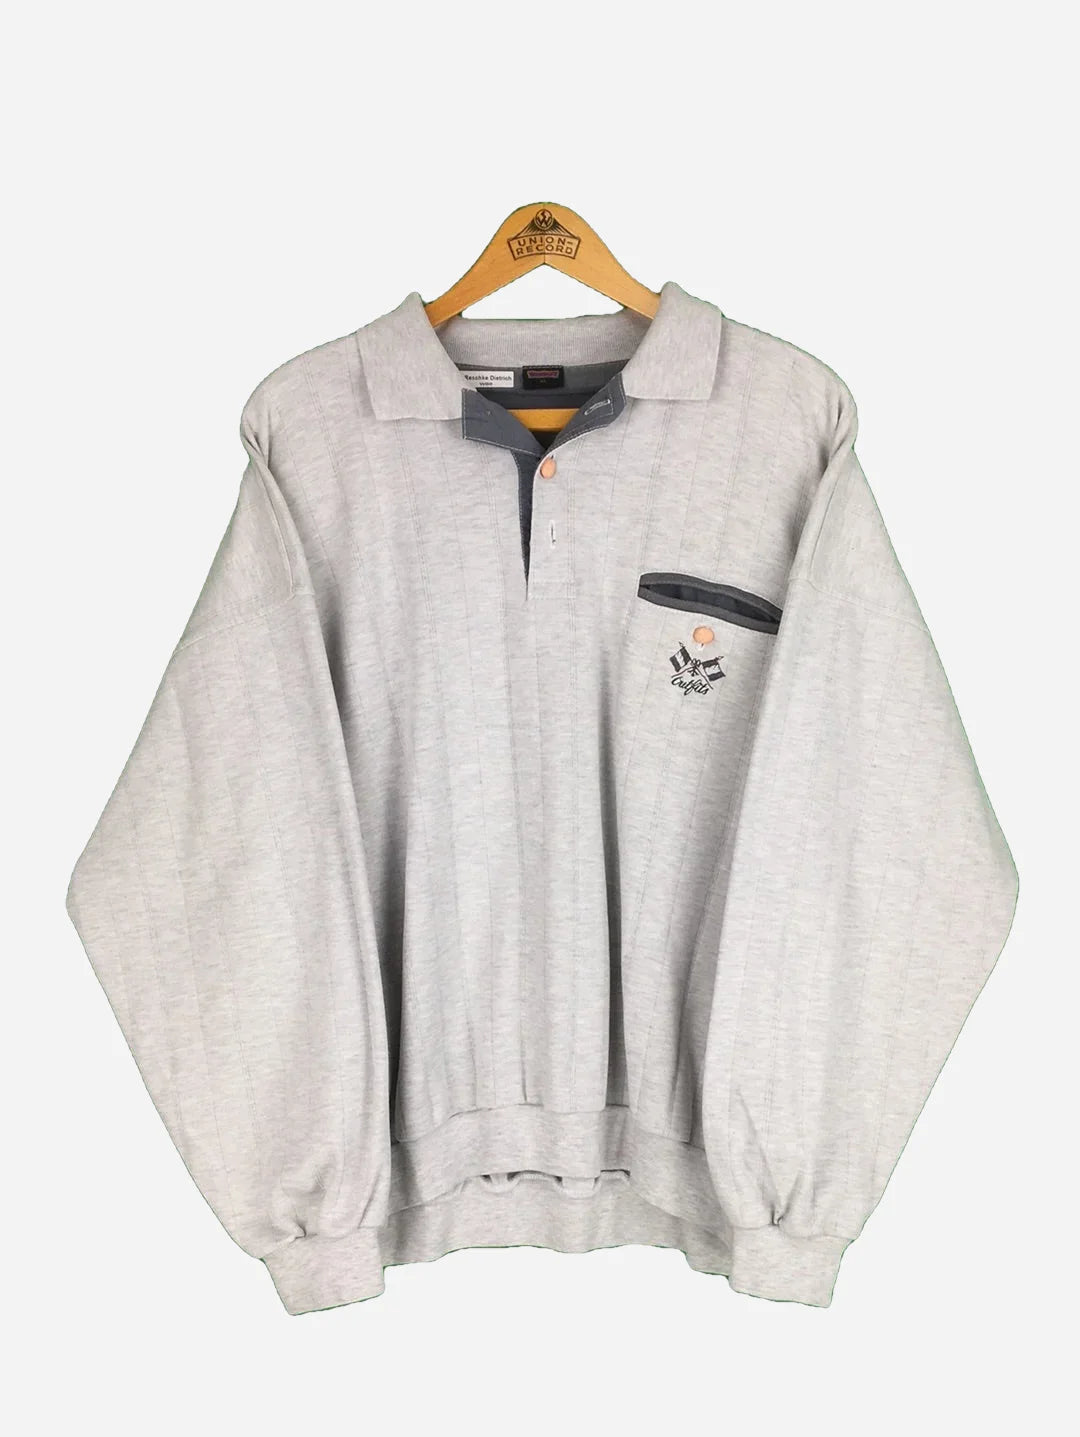 Westbury Knopf Sweater (L)